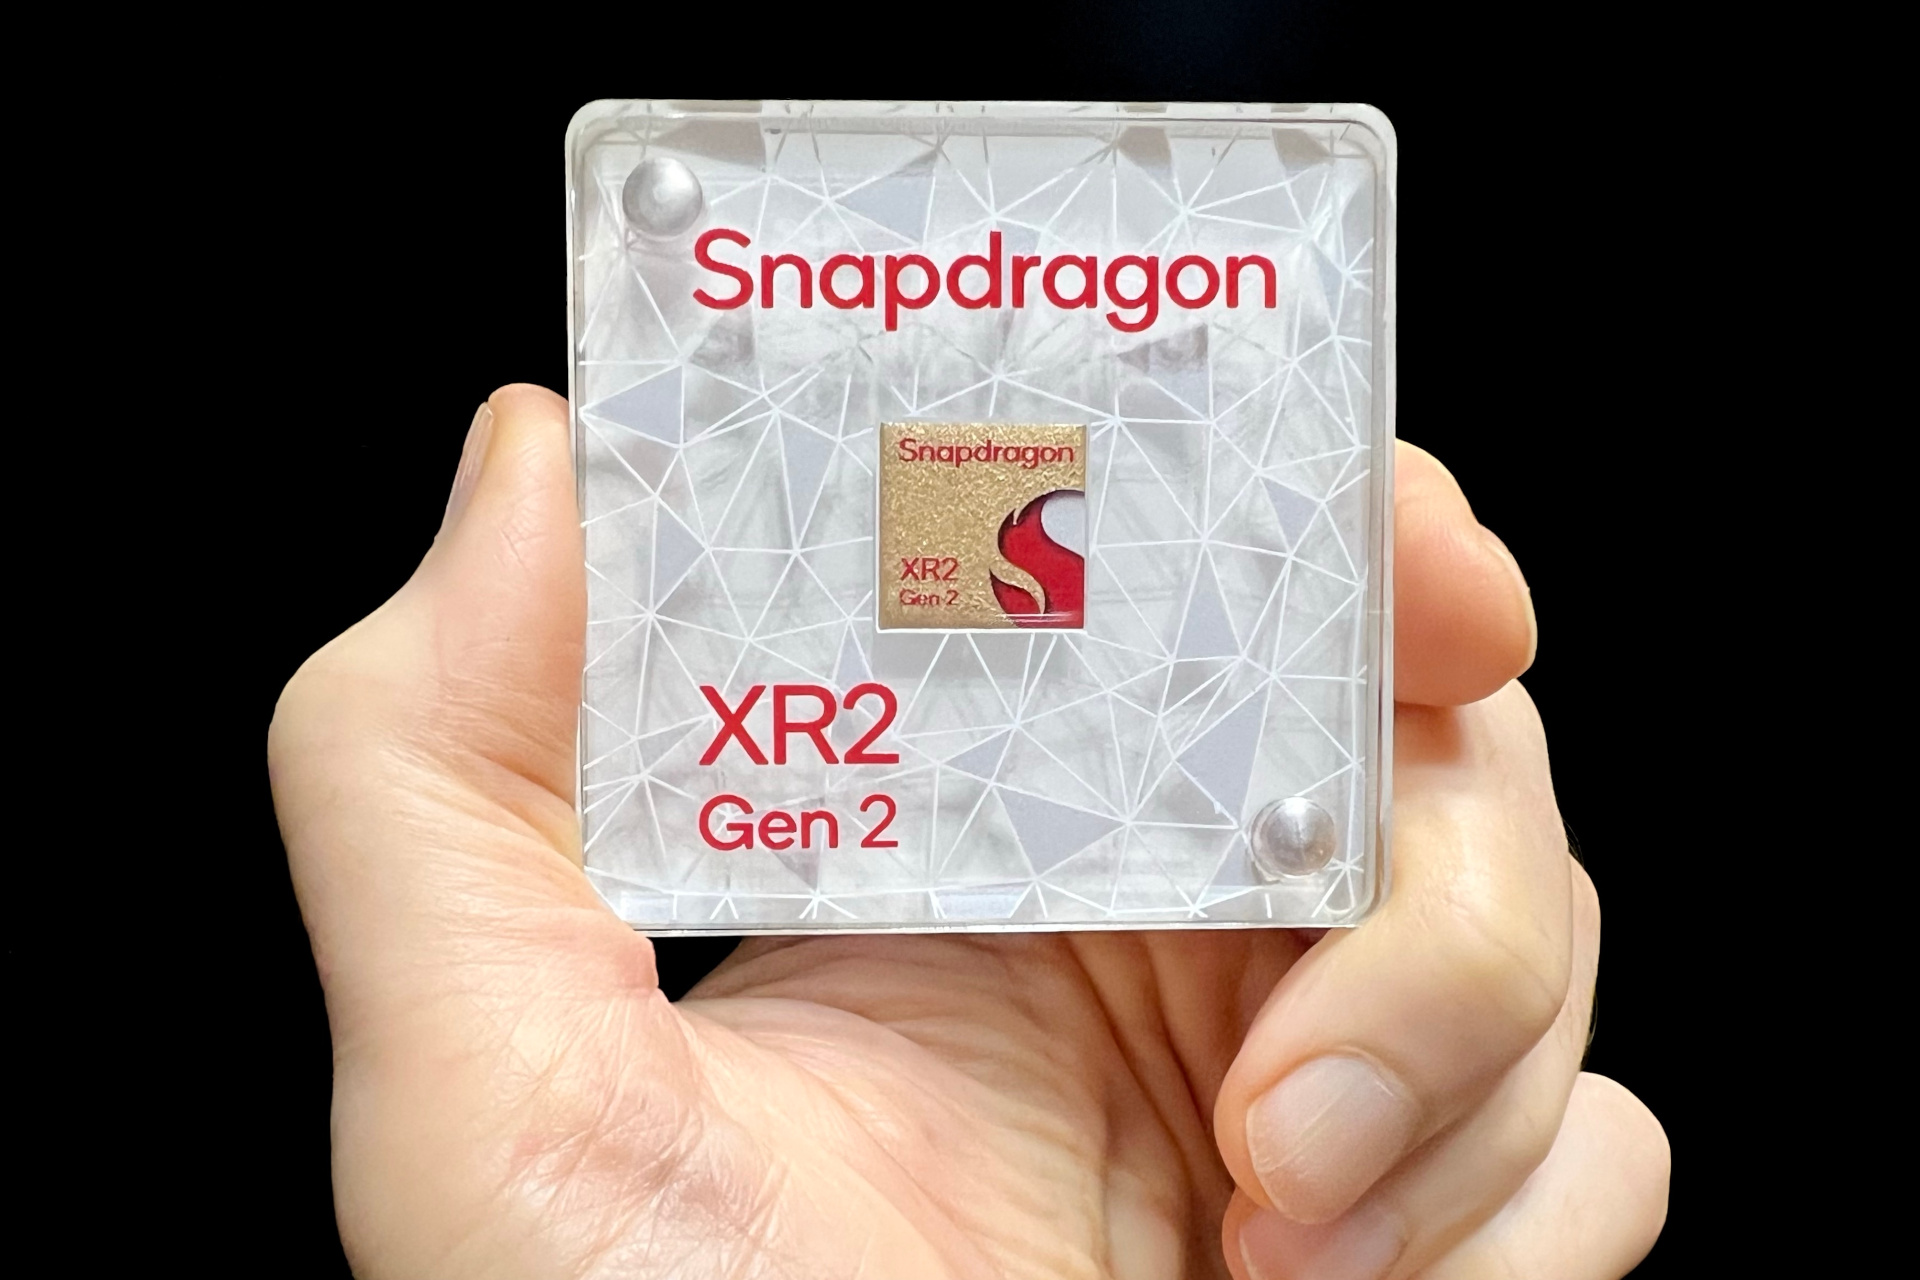 Alan Truly دارای یک مدل نمایشگر از تراشه Snapdragon XR2 Gen 2 کوالکام است.